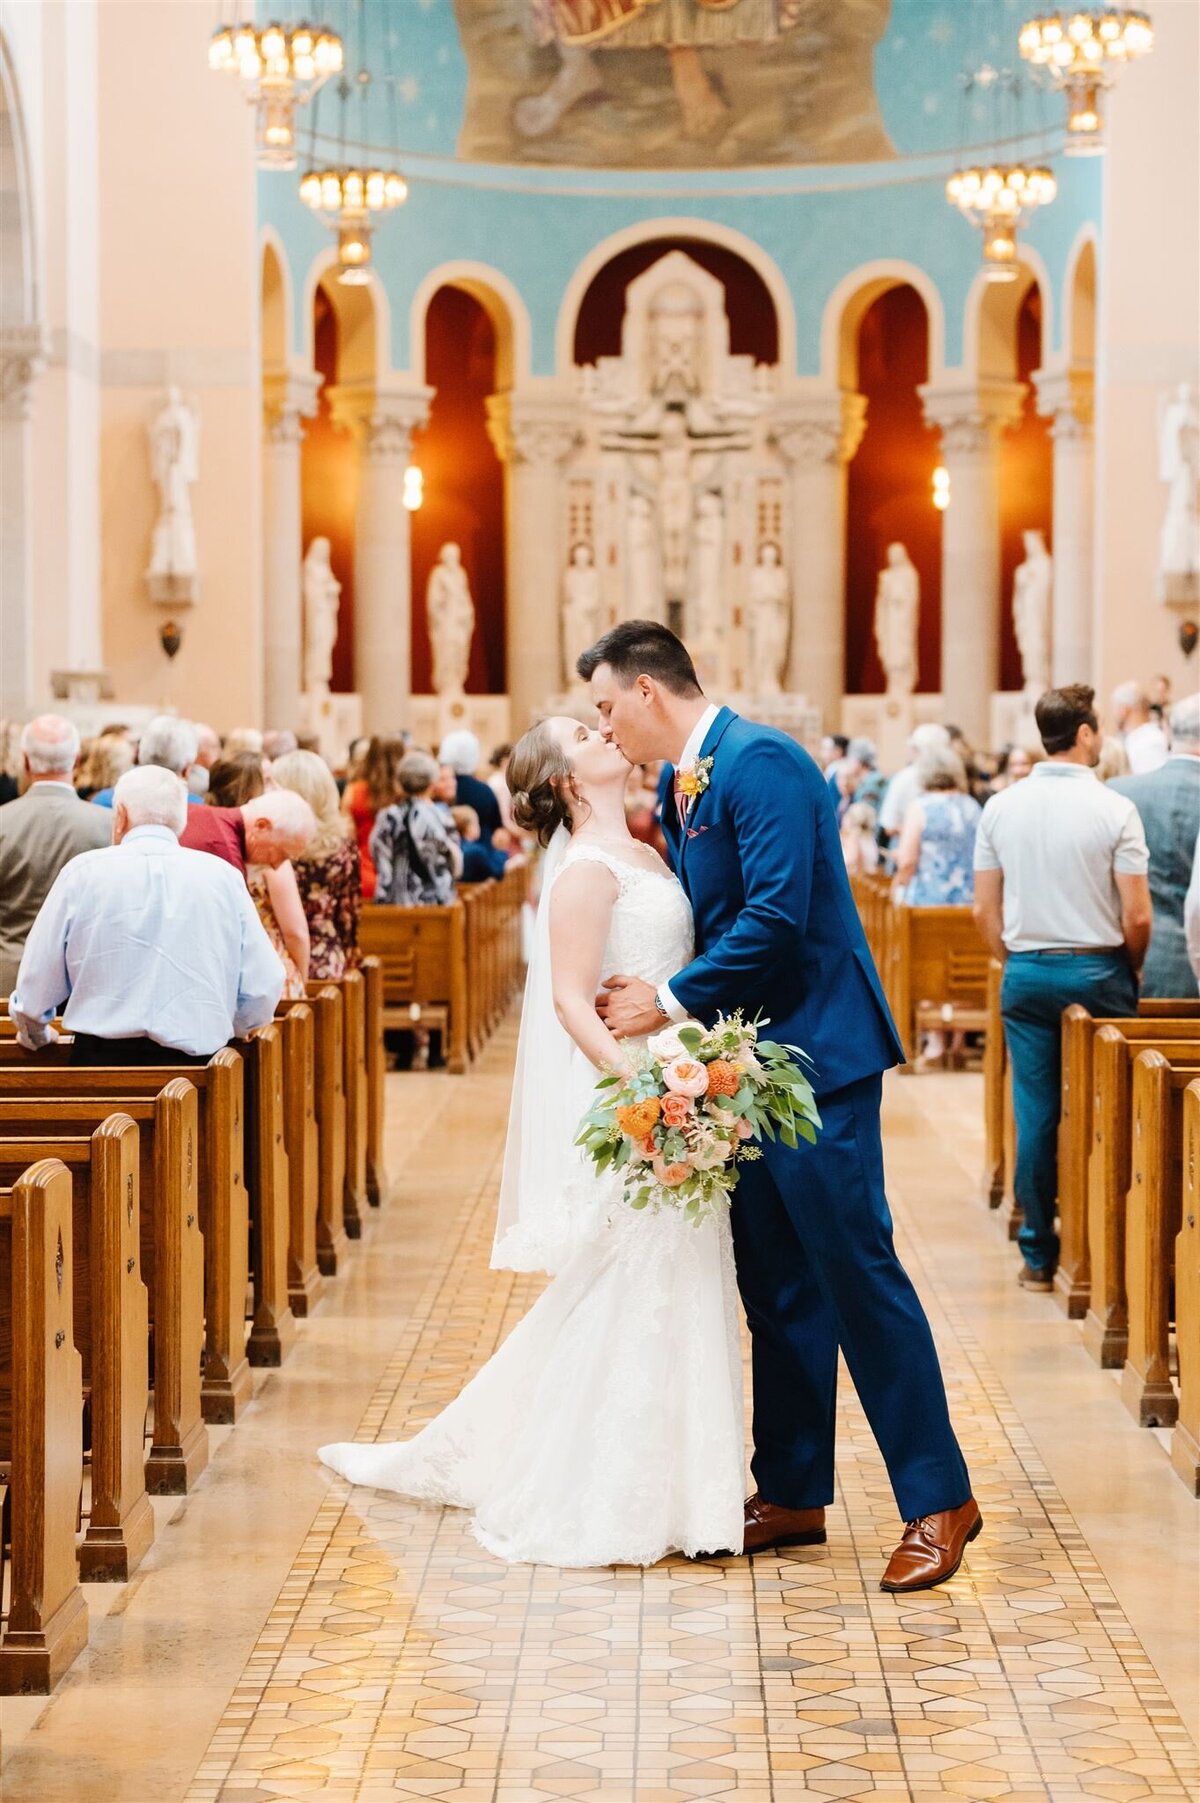 bridde and groom kiss down the aisle at St. PAul church in Minnesota